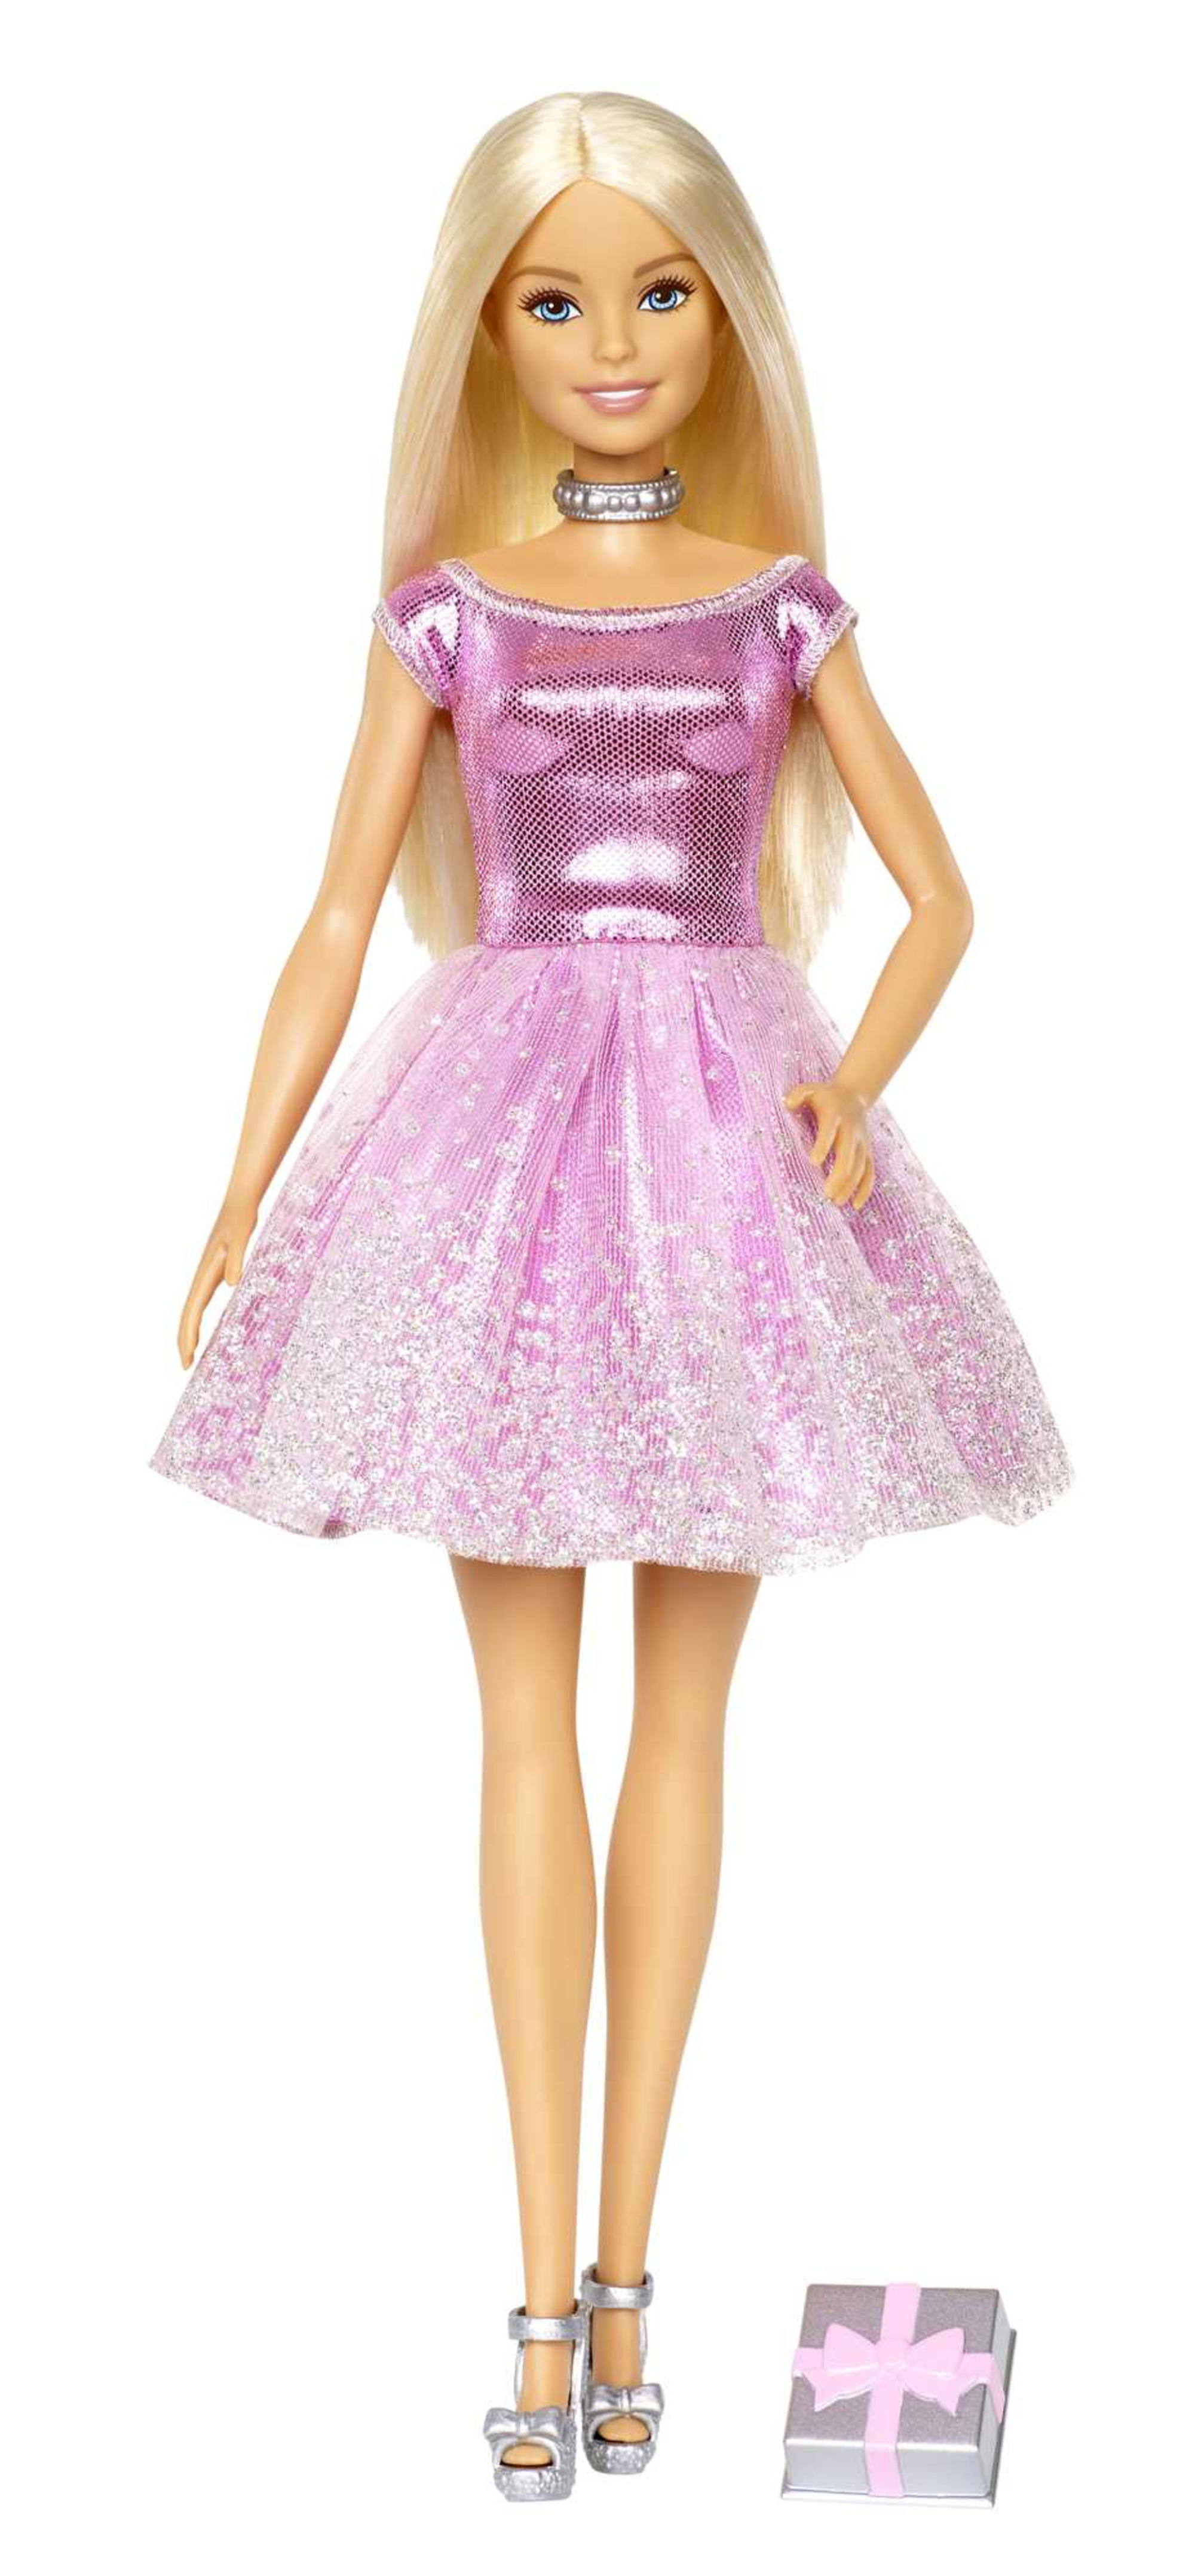 Barbie Doll & Accessory